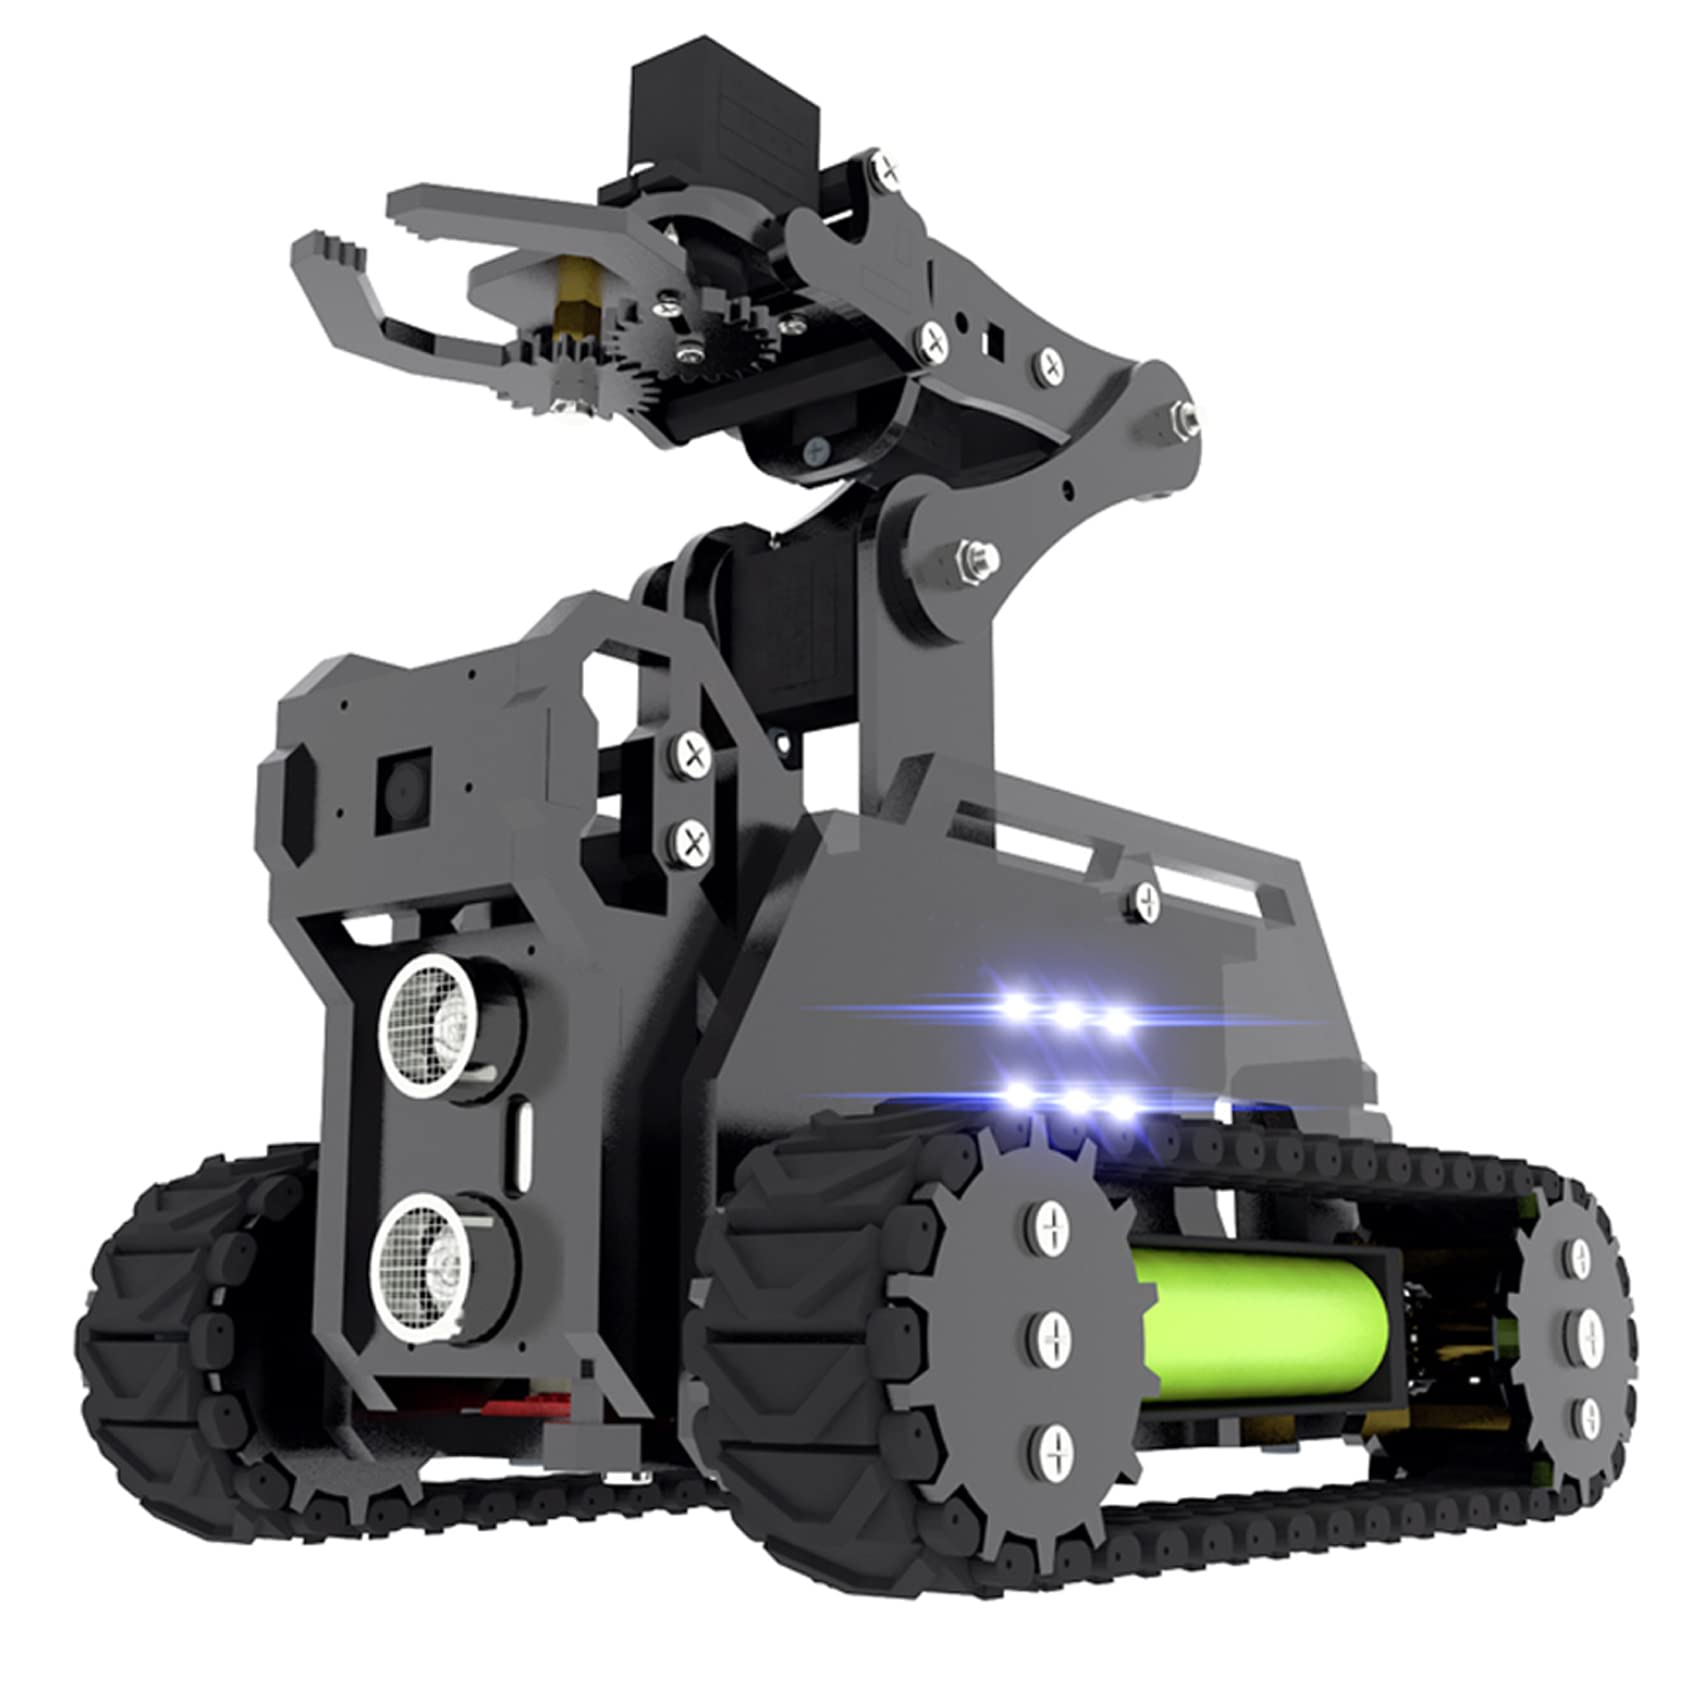 Adeept RaspTank Smart Robot Kit for Raspberry Pi 4 3 Model B B OpenCV Tank 4-DOF Robotics Kit DIY Coding Building Projects R